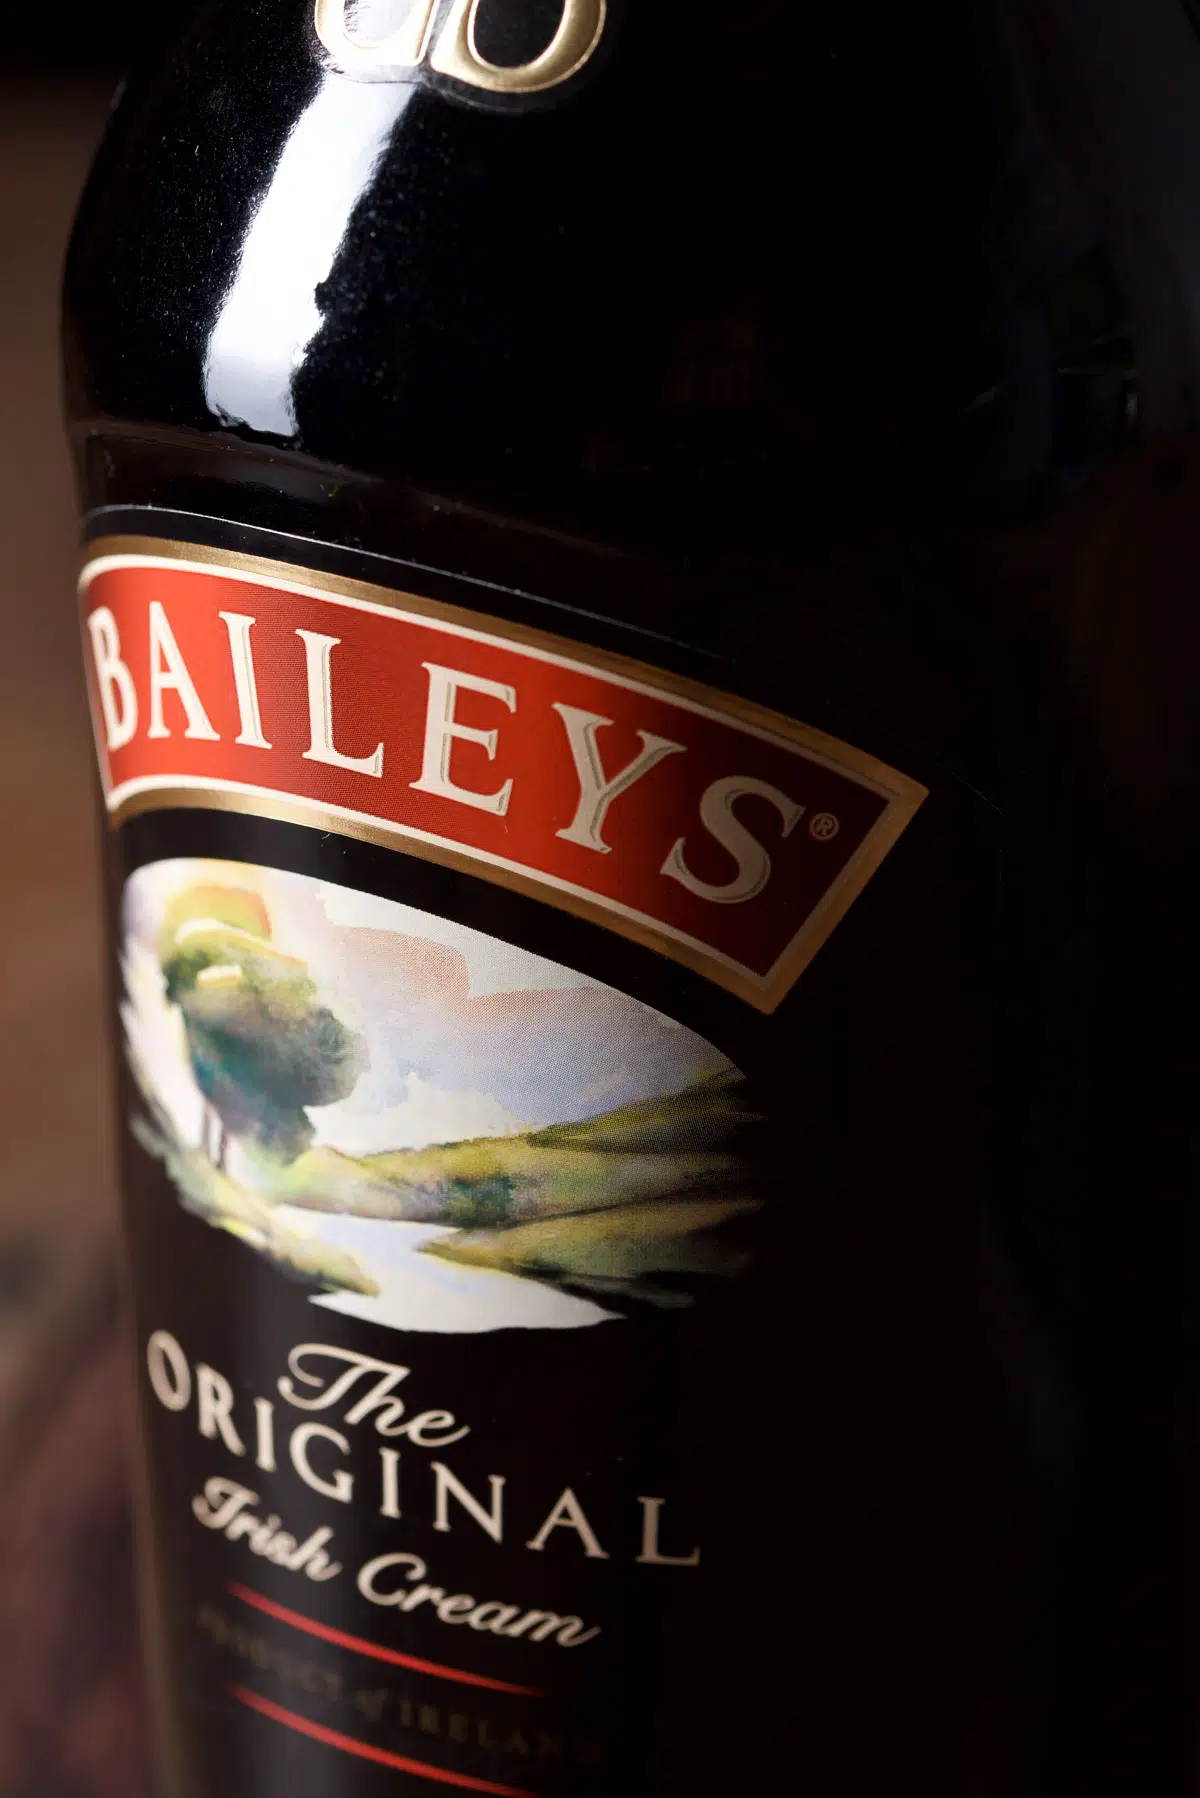 Baileys Irish Cream Original: The Ultimate Bottle Guide